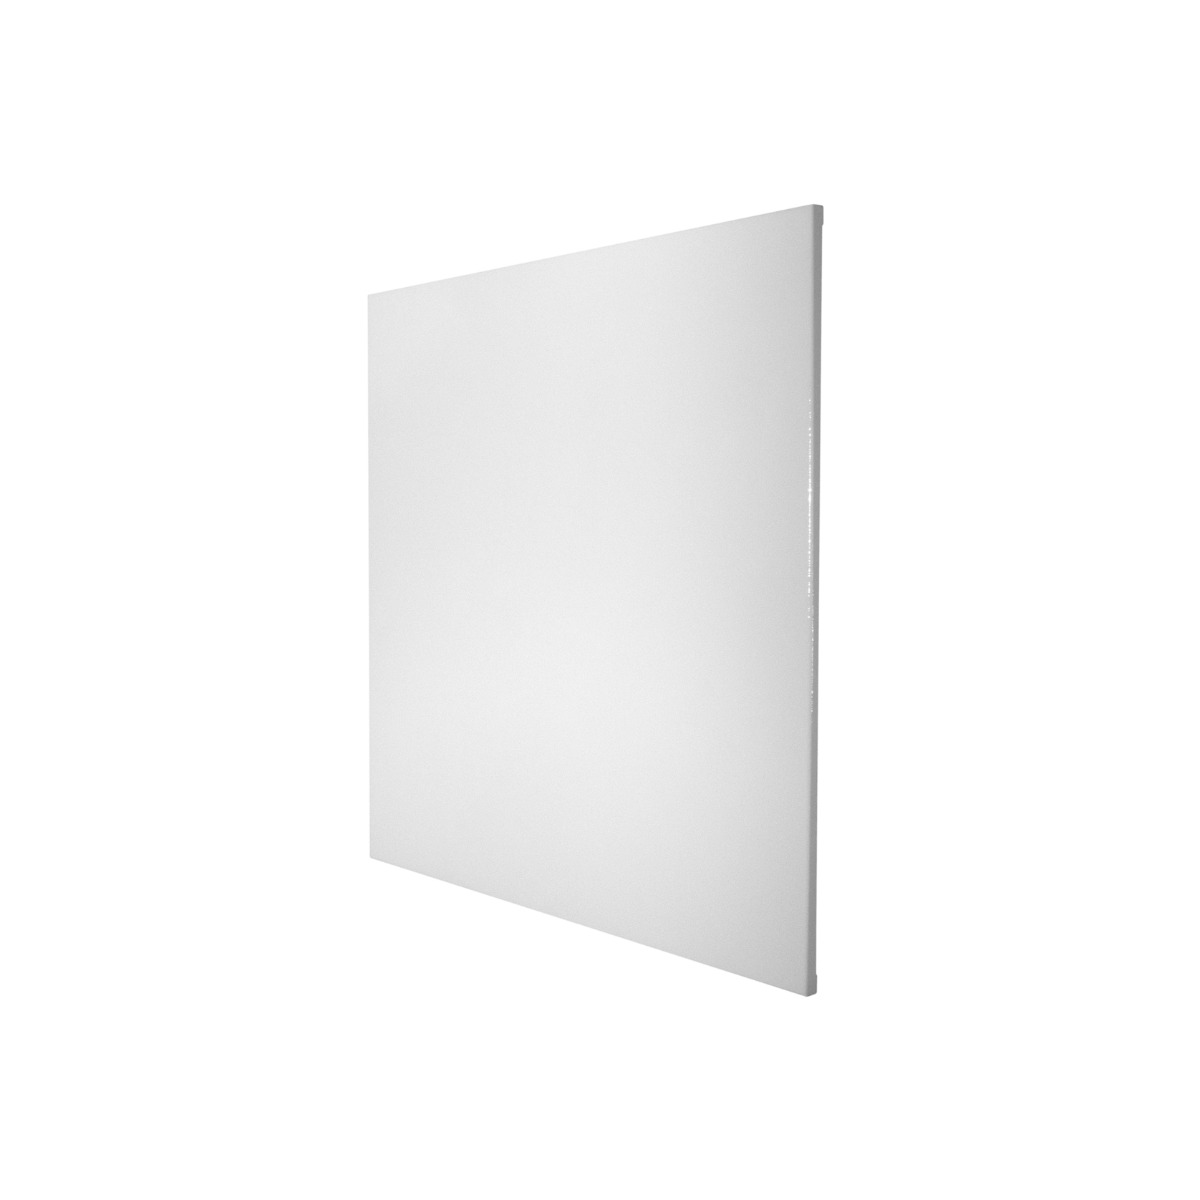 Technotherm ISP Frameless Infrared Heating Panel - White 350w (600 x 600mm)